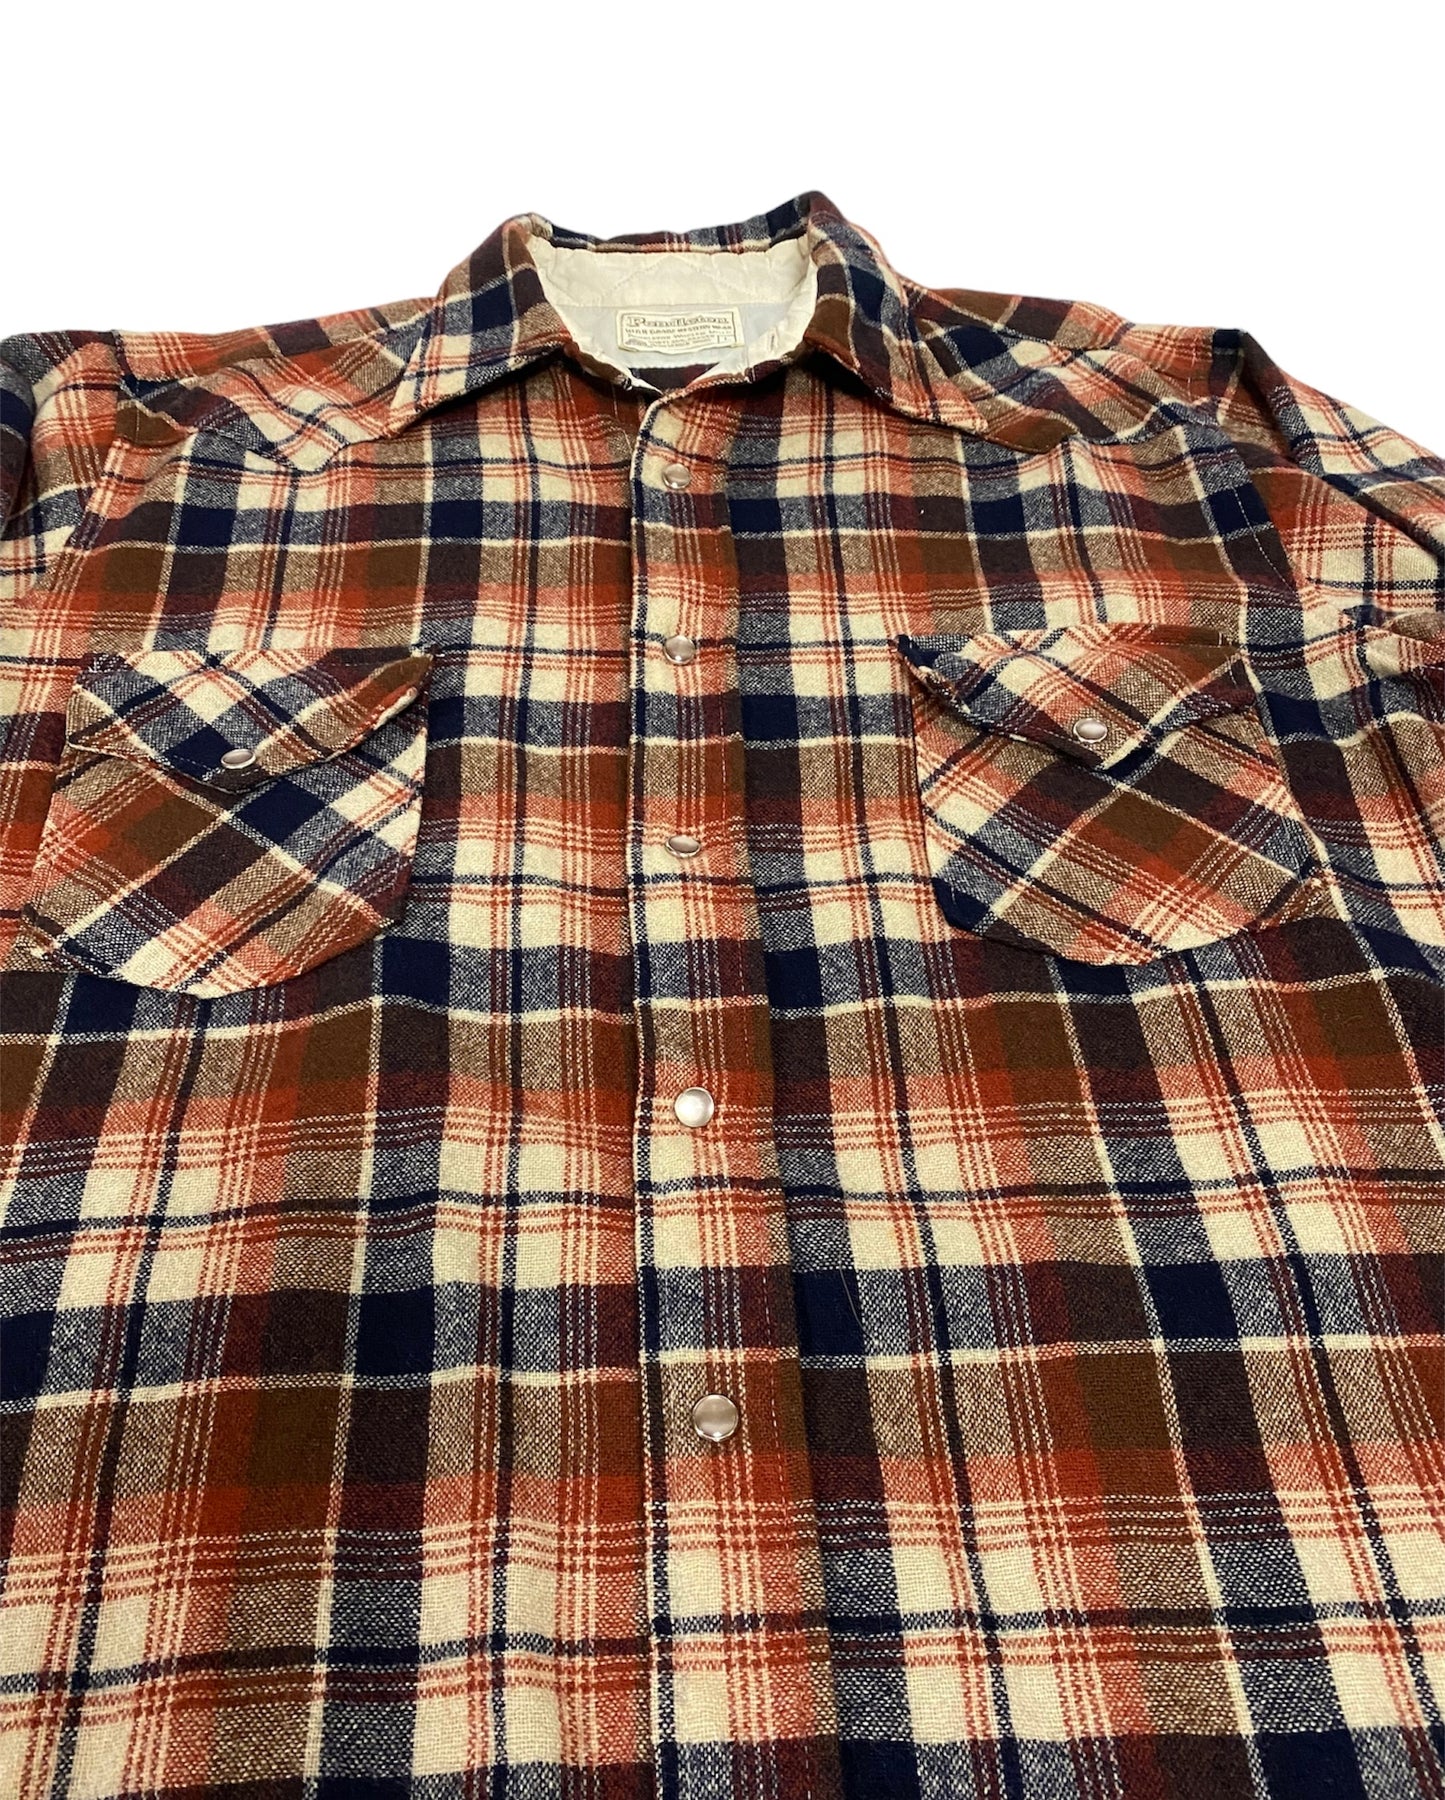 1950’s Pendleton Western Wear Shirt